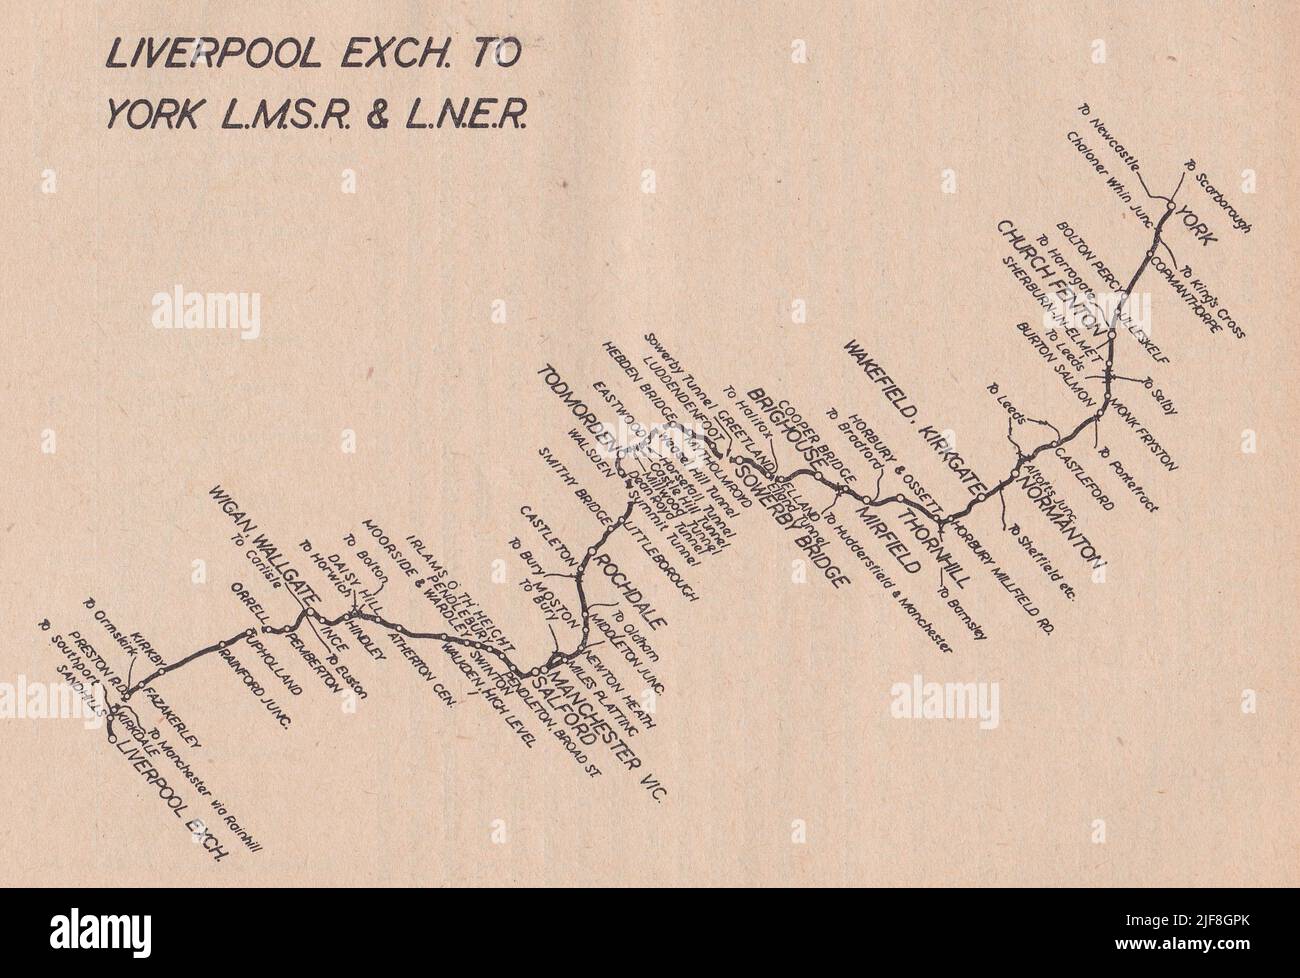 Vintage railway map - Liverpool Exchange to York L.M.S.R & L.N.E.R. Stock Photo